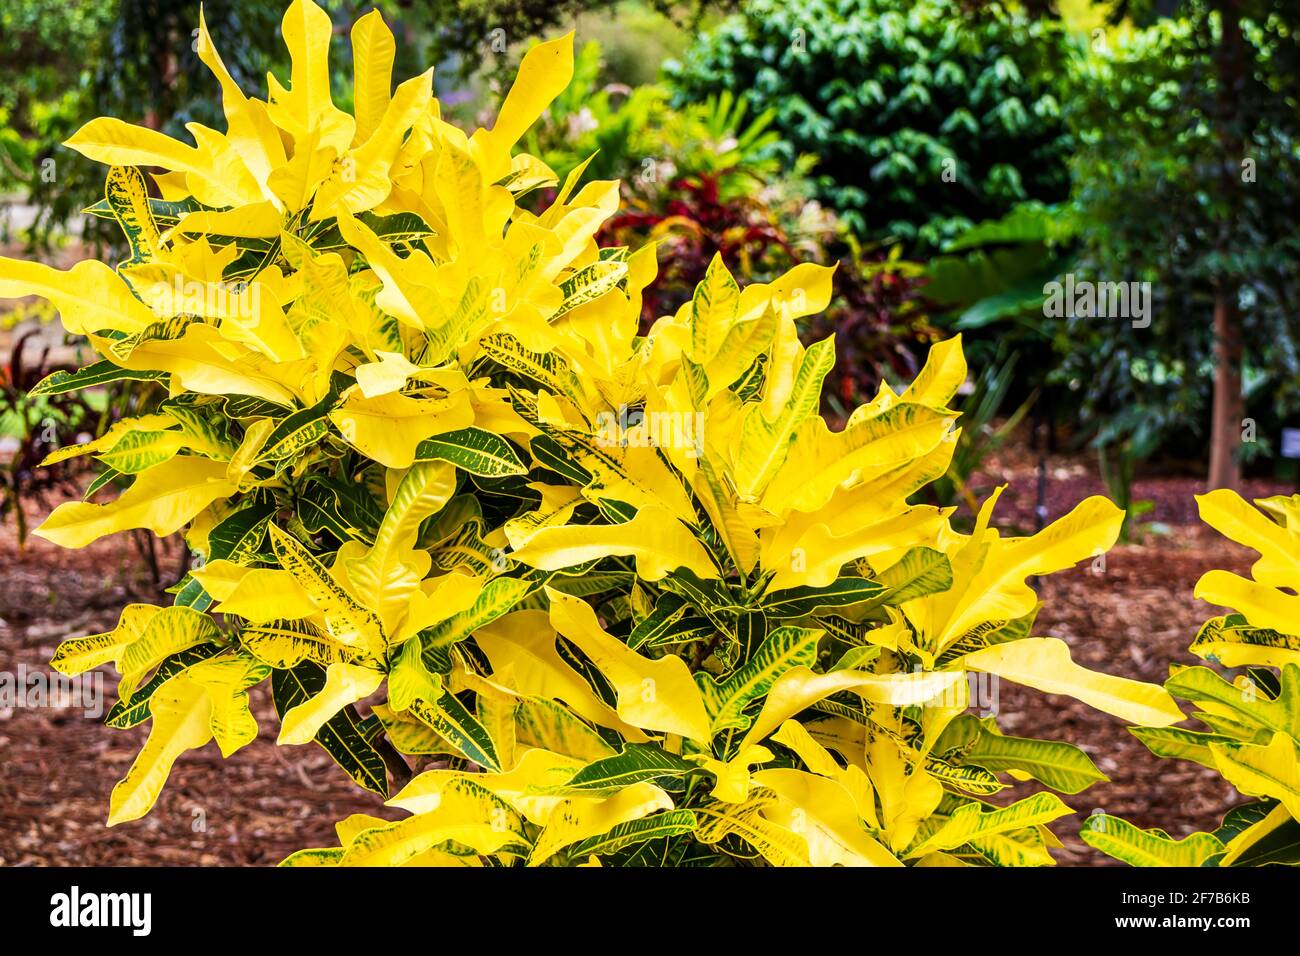 Codiaeum variegatum or Garden Croton plant with ornamental foliage. Stock Photo